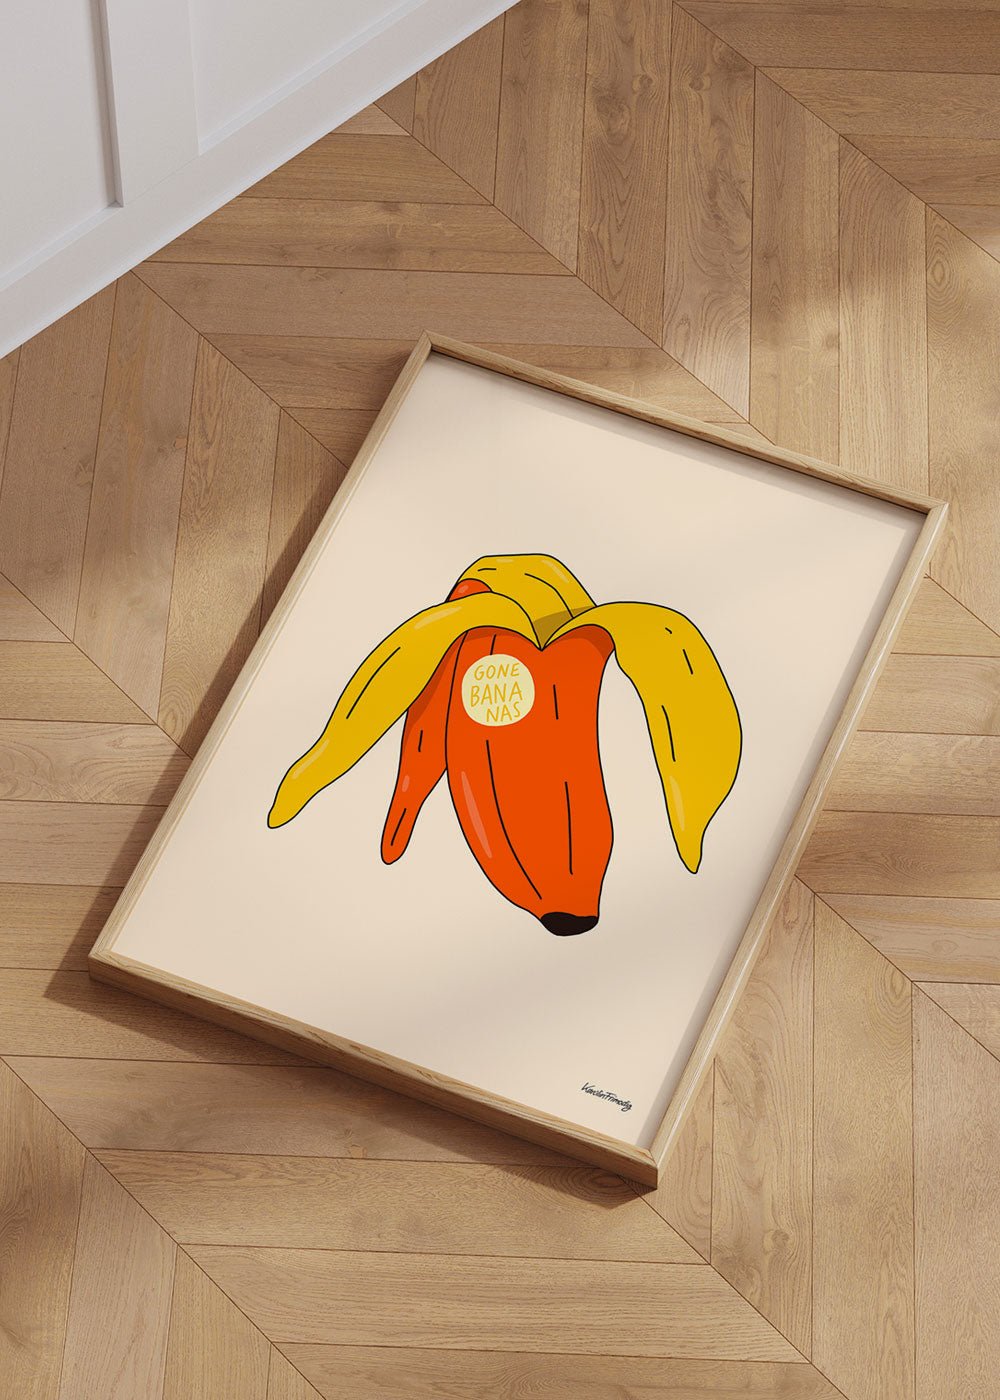 Gone Bananas Poster - #shop_name